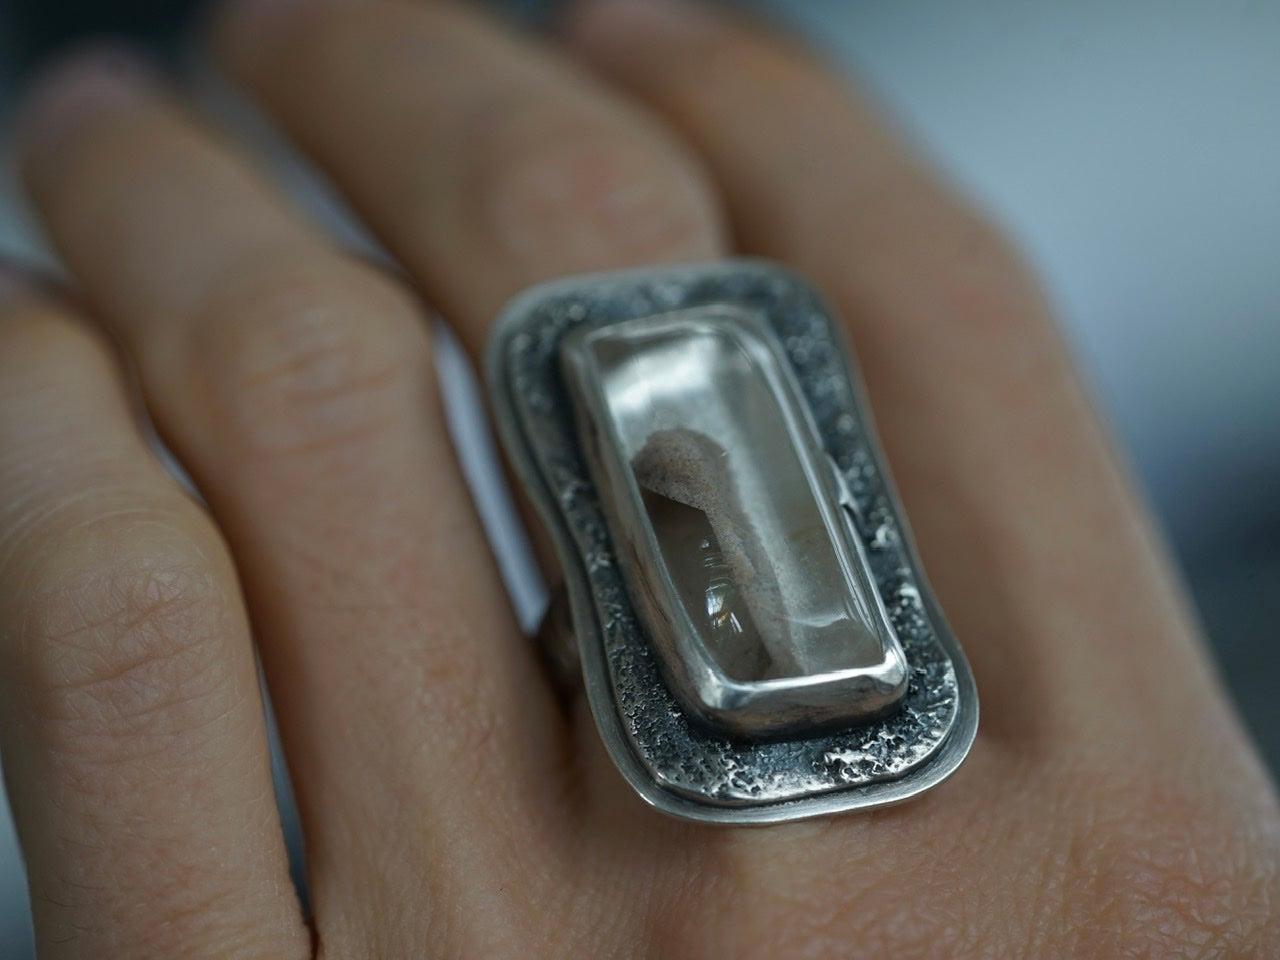 Phantom quartz mirror ring, size 7.5